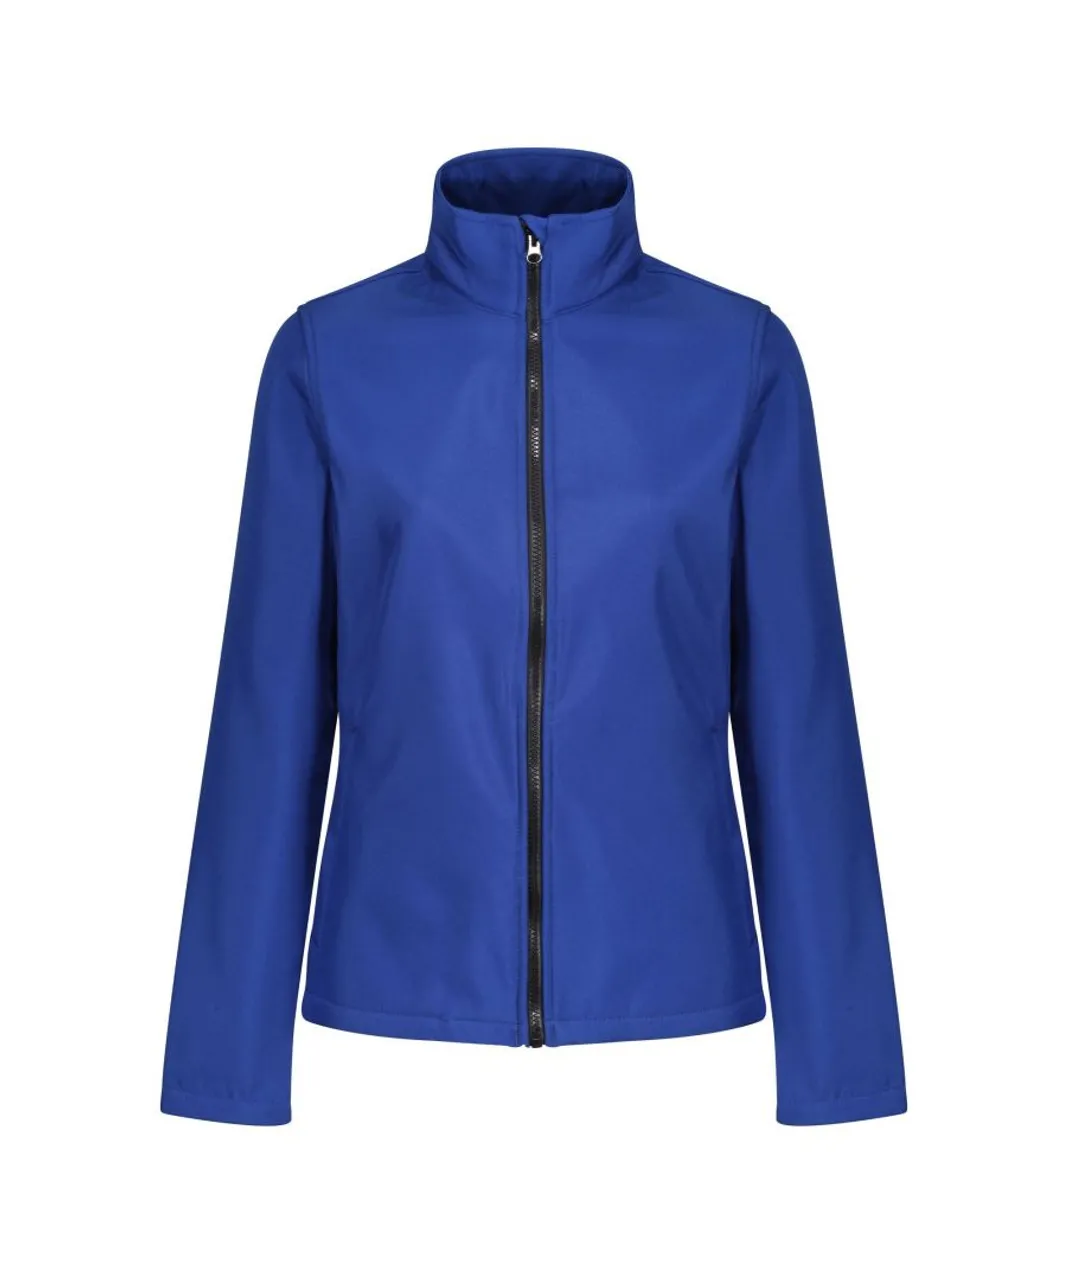 Regatta Standout Womens/Ladies Ablaze Printable Soft Shell Jacket (Royal Blue/Black) - Multicolour